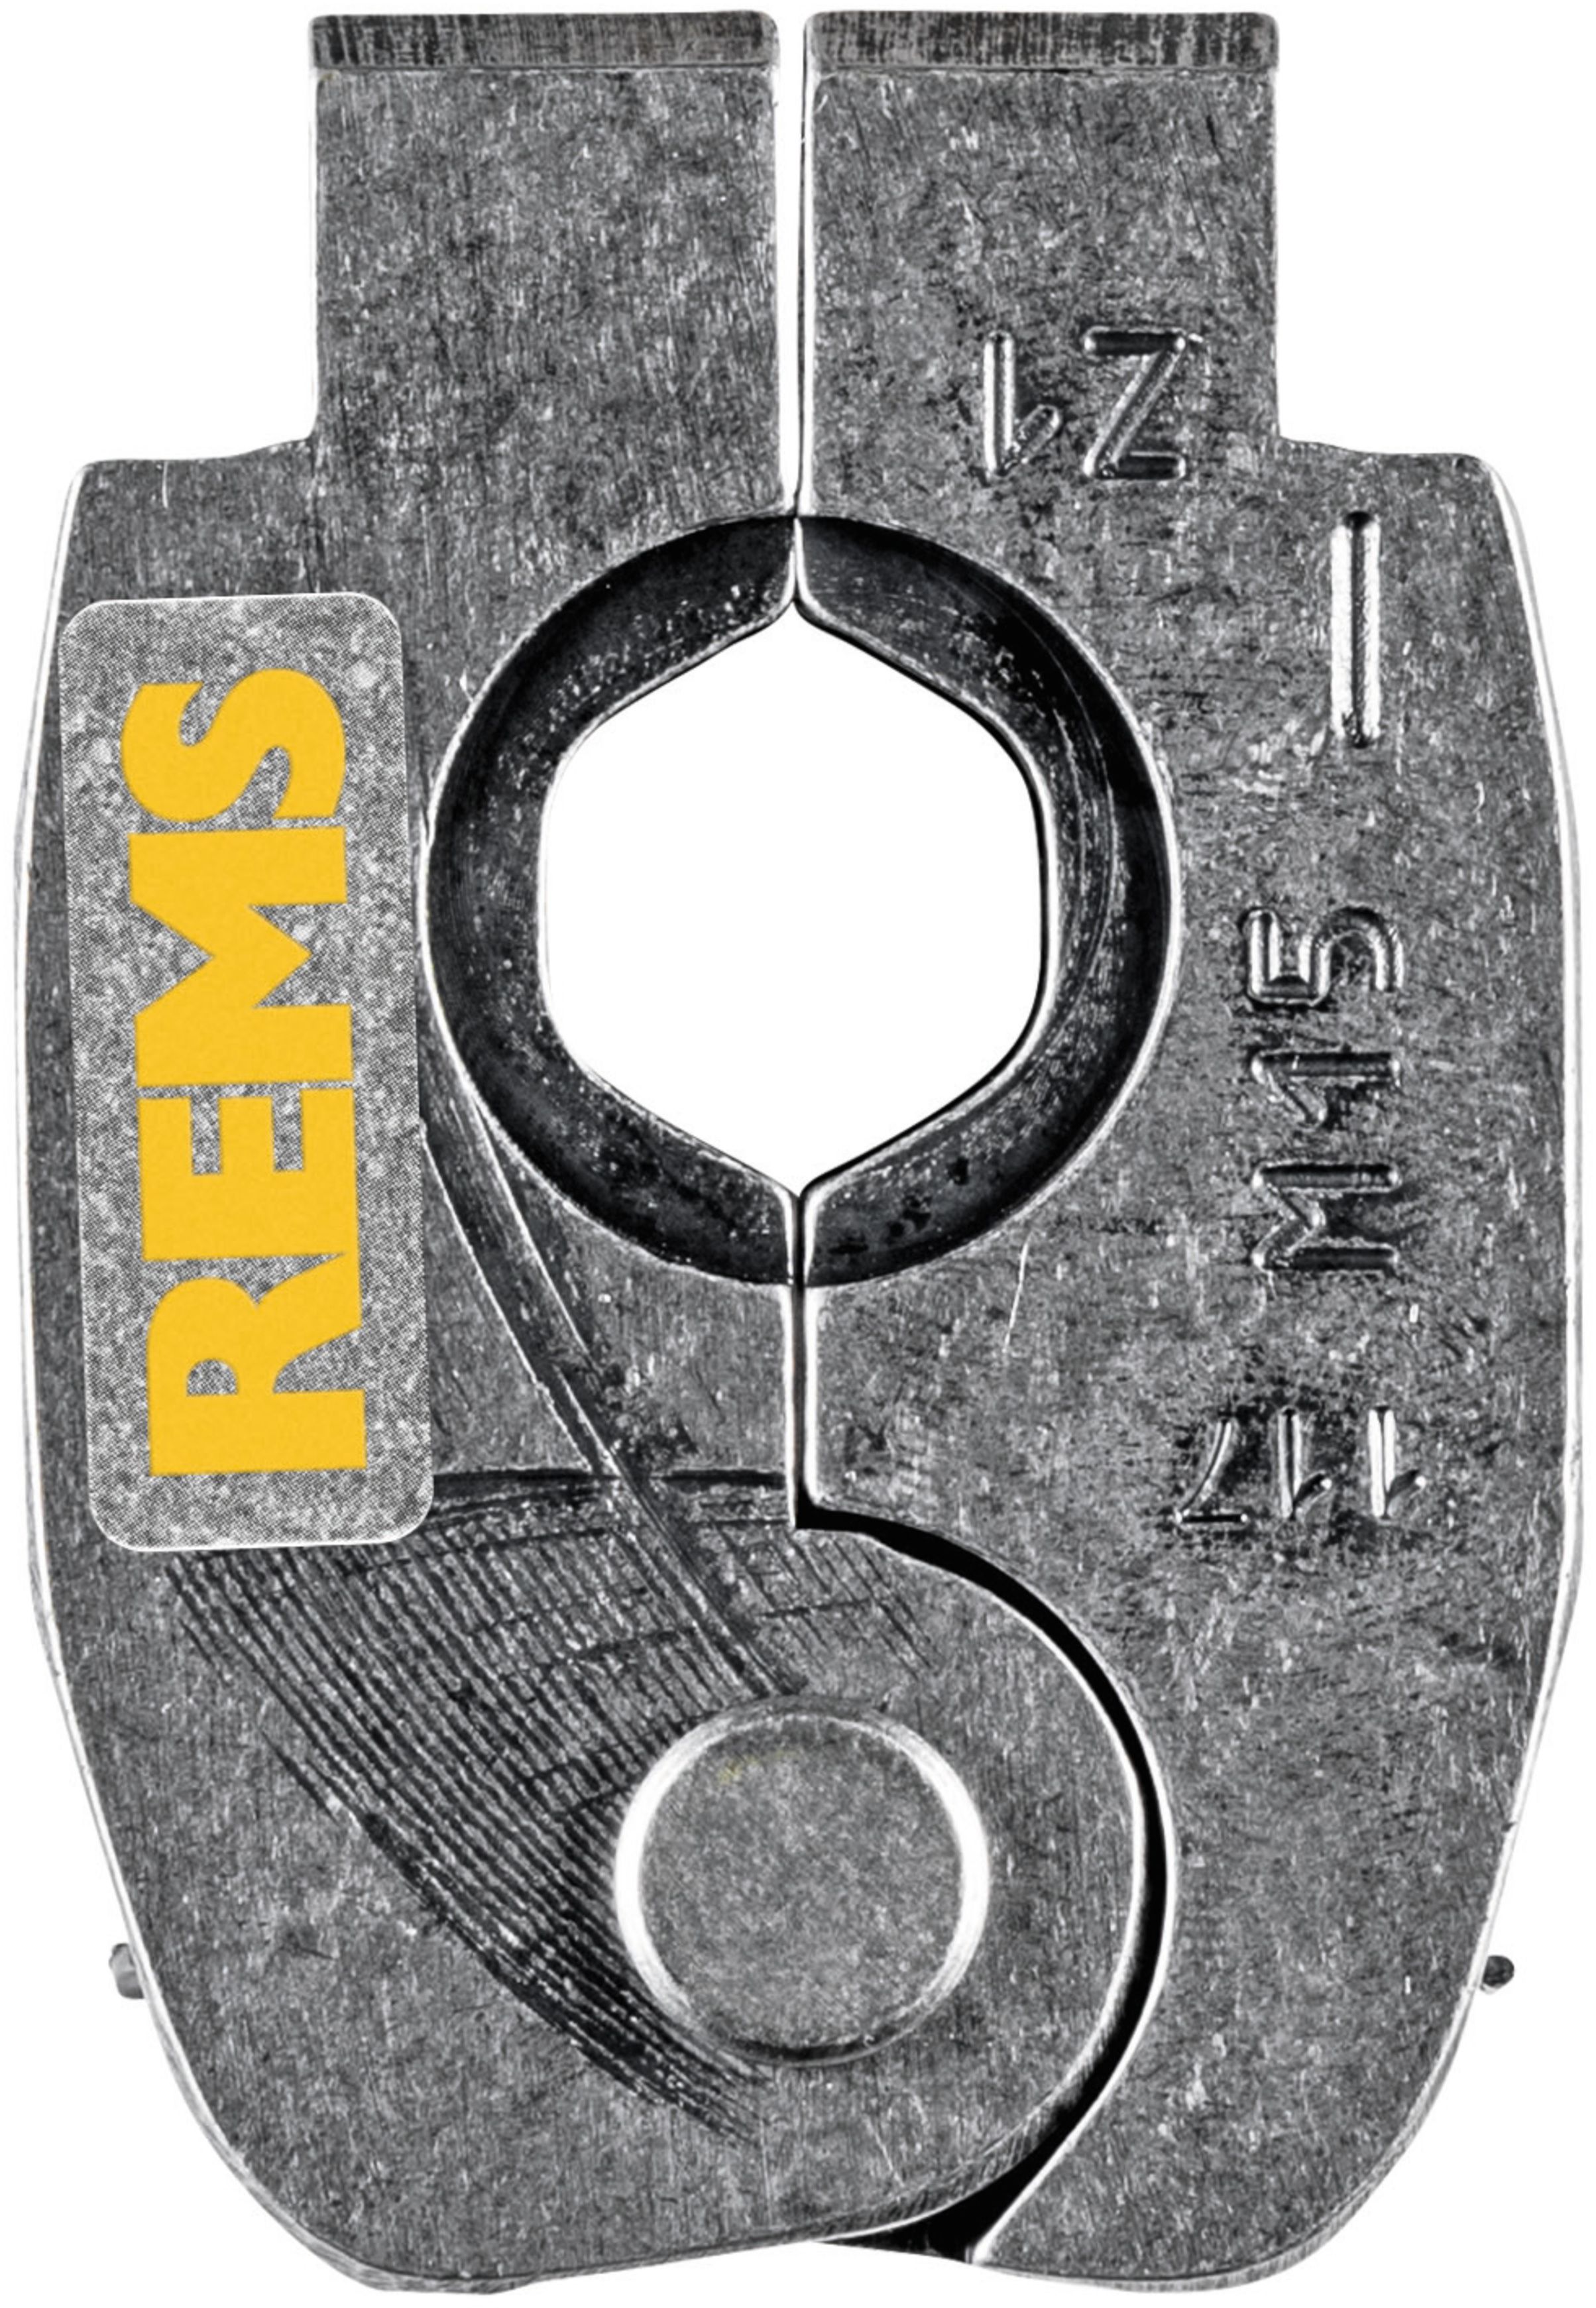 REMS PRESSRING M 18 45° (PR-2B) 574524 R, für Mini-Press ACC - Sanitärwerkzeuge